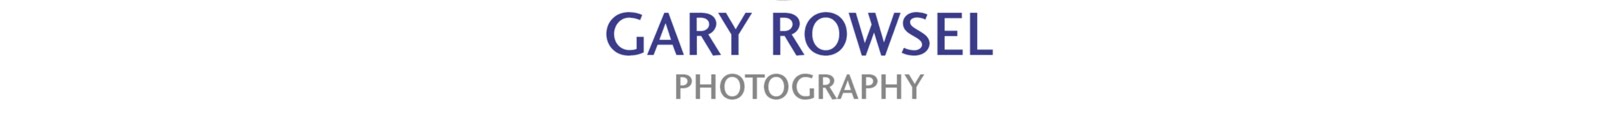 Gary Rowsel Photography